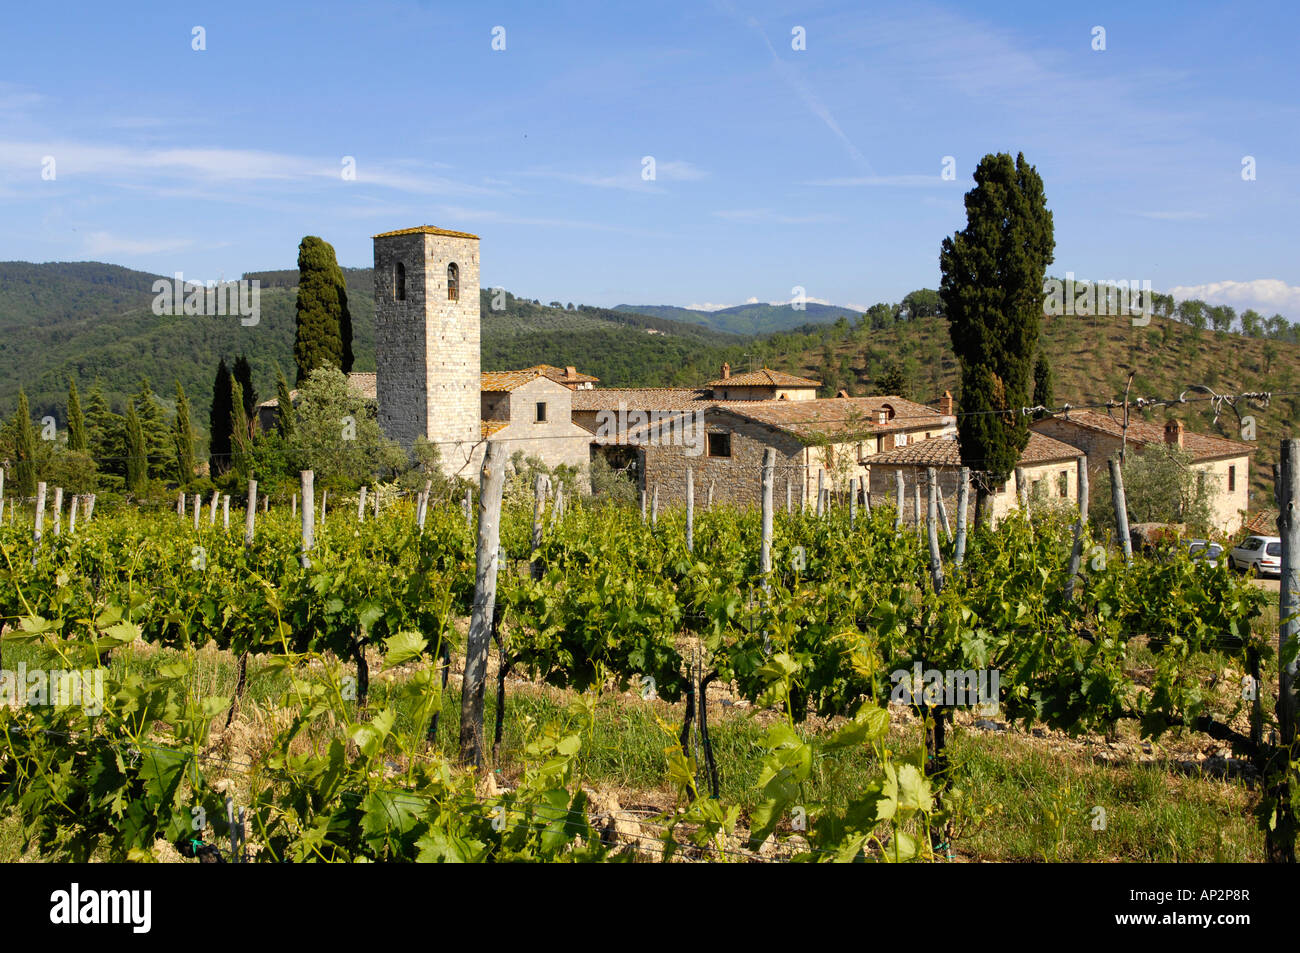 Vignoble en face de Castello Spaltenna, Toscane, Italie Banque D'Images